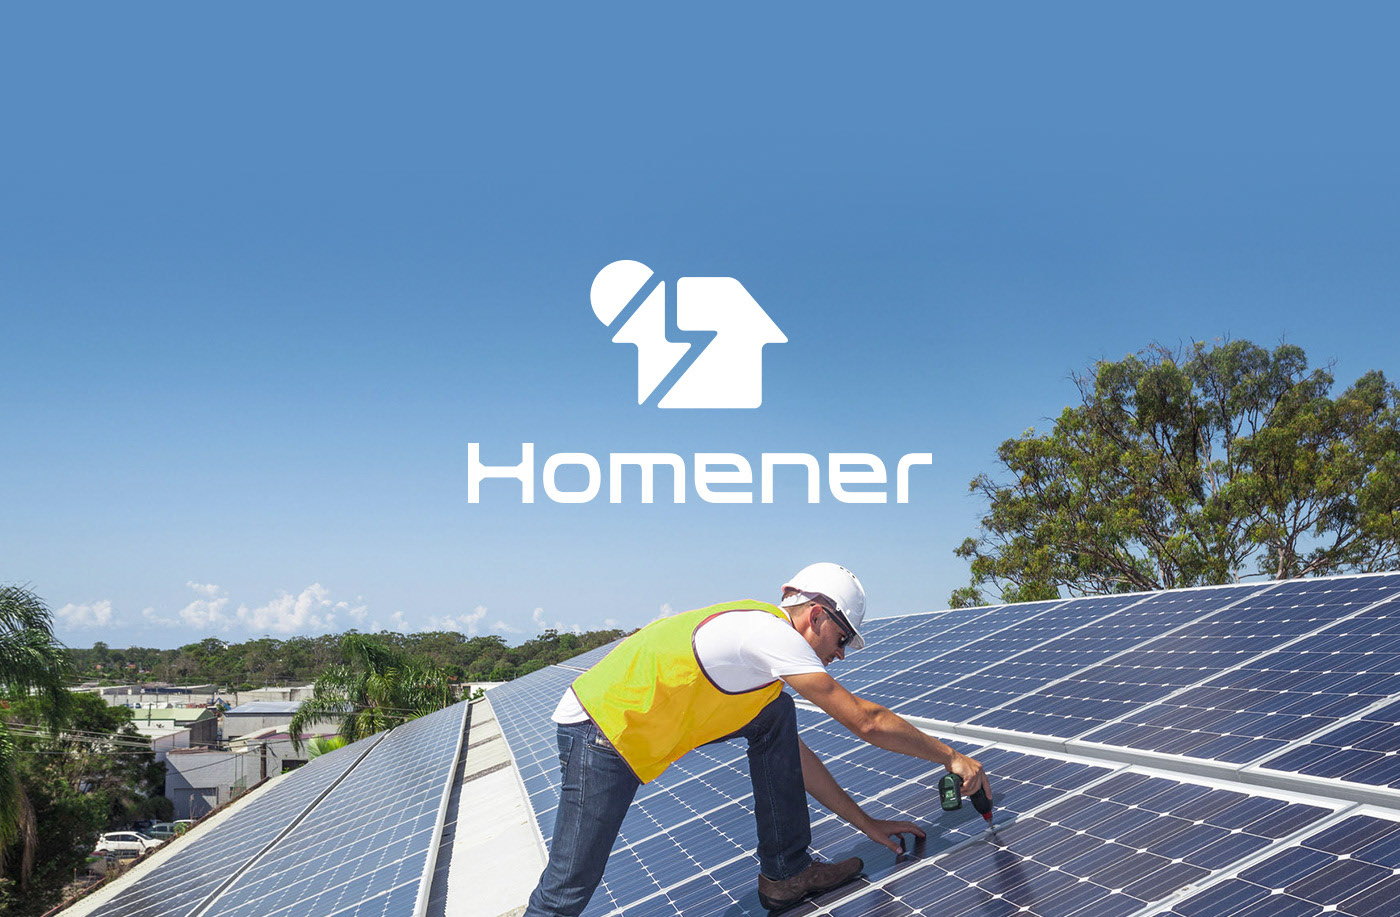 Only energy. Логотип солнечные панели. Логотип Solar Power. Solar Panels лого. Solar Energy Panel logo.